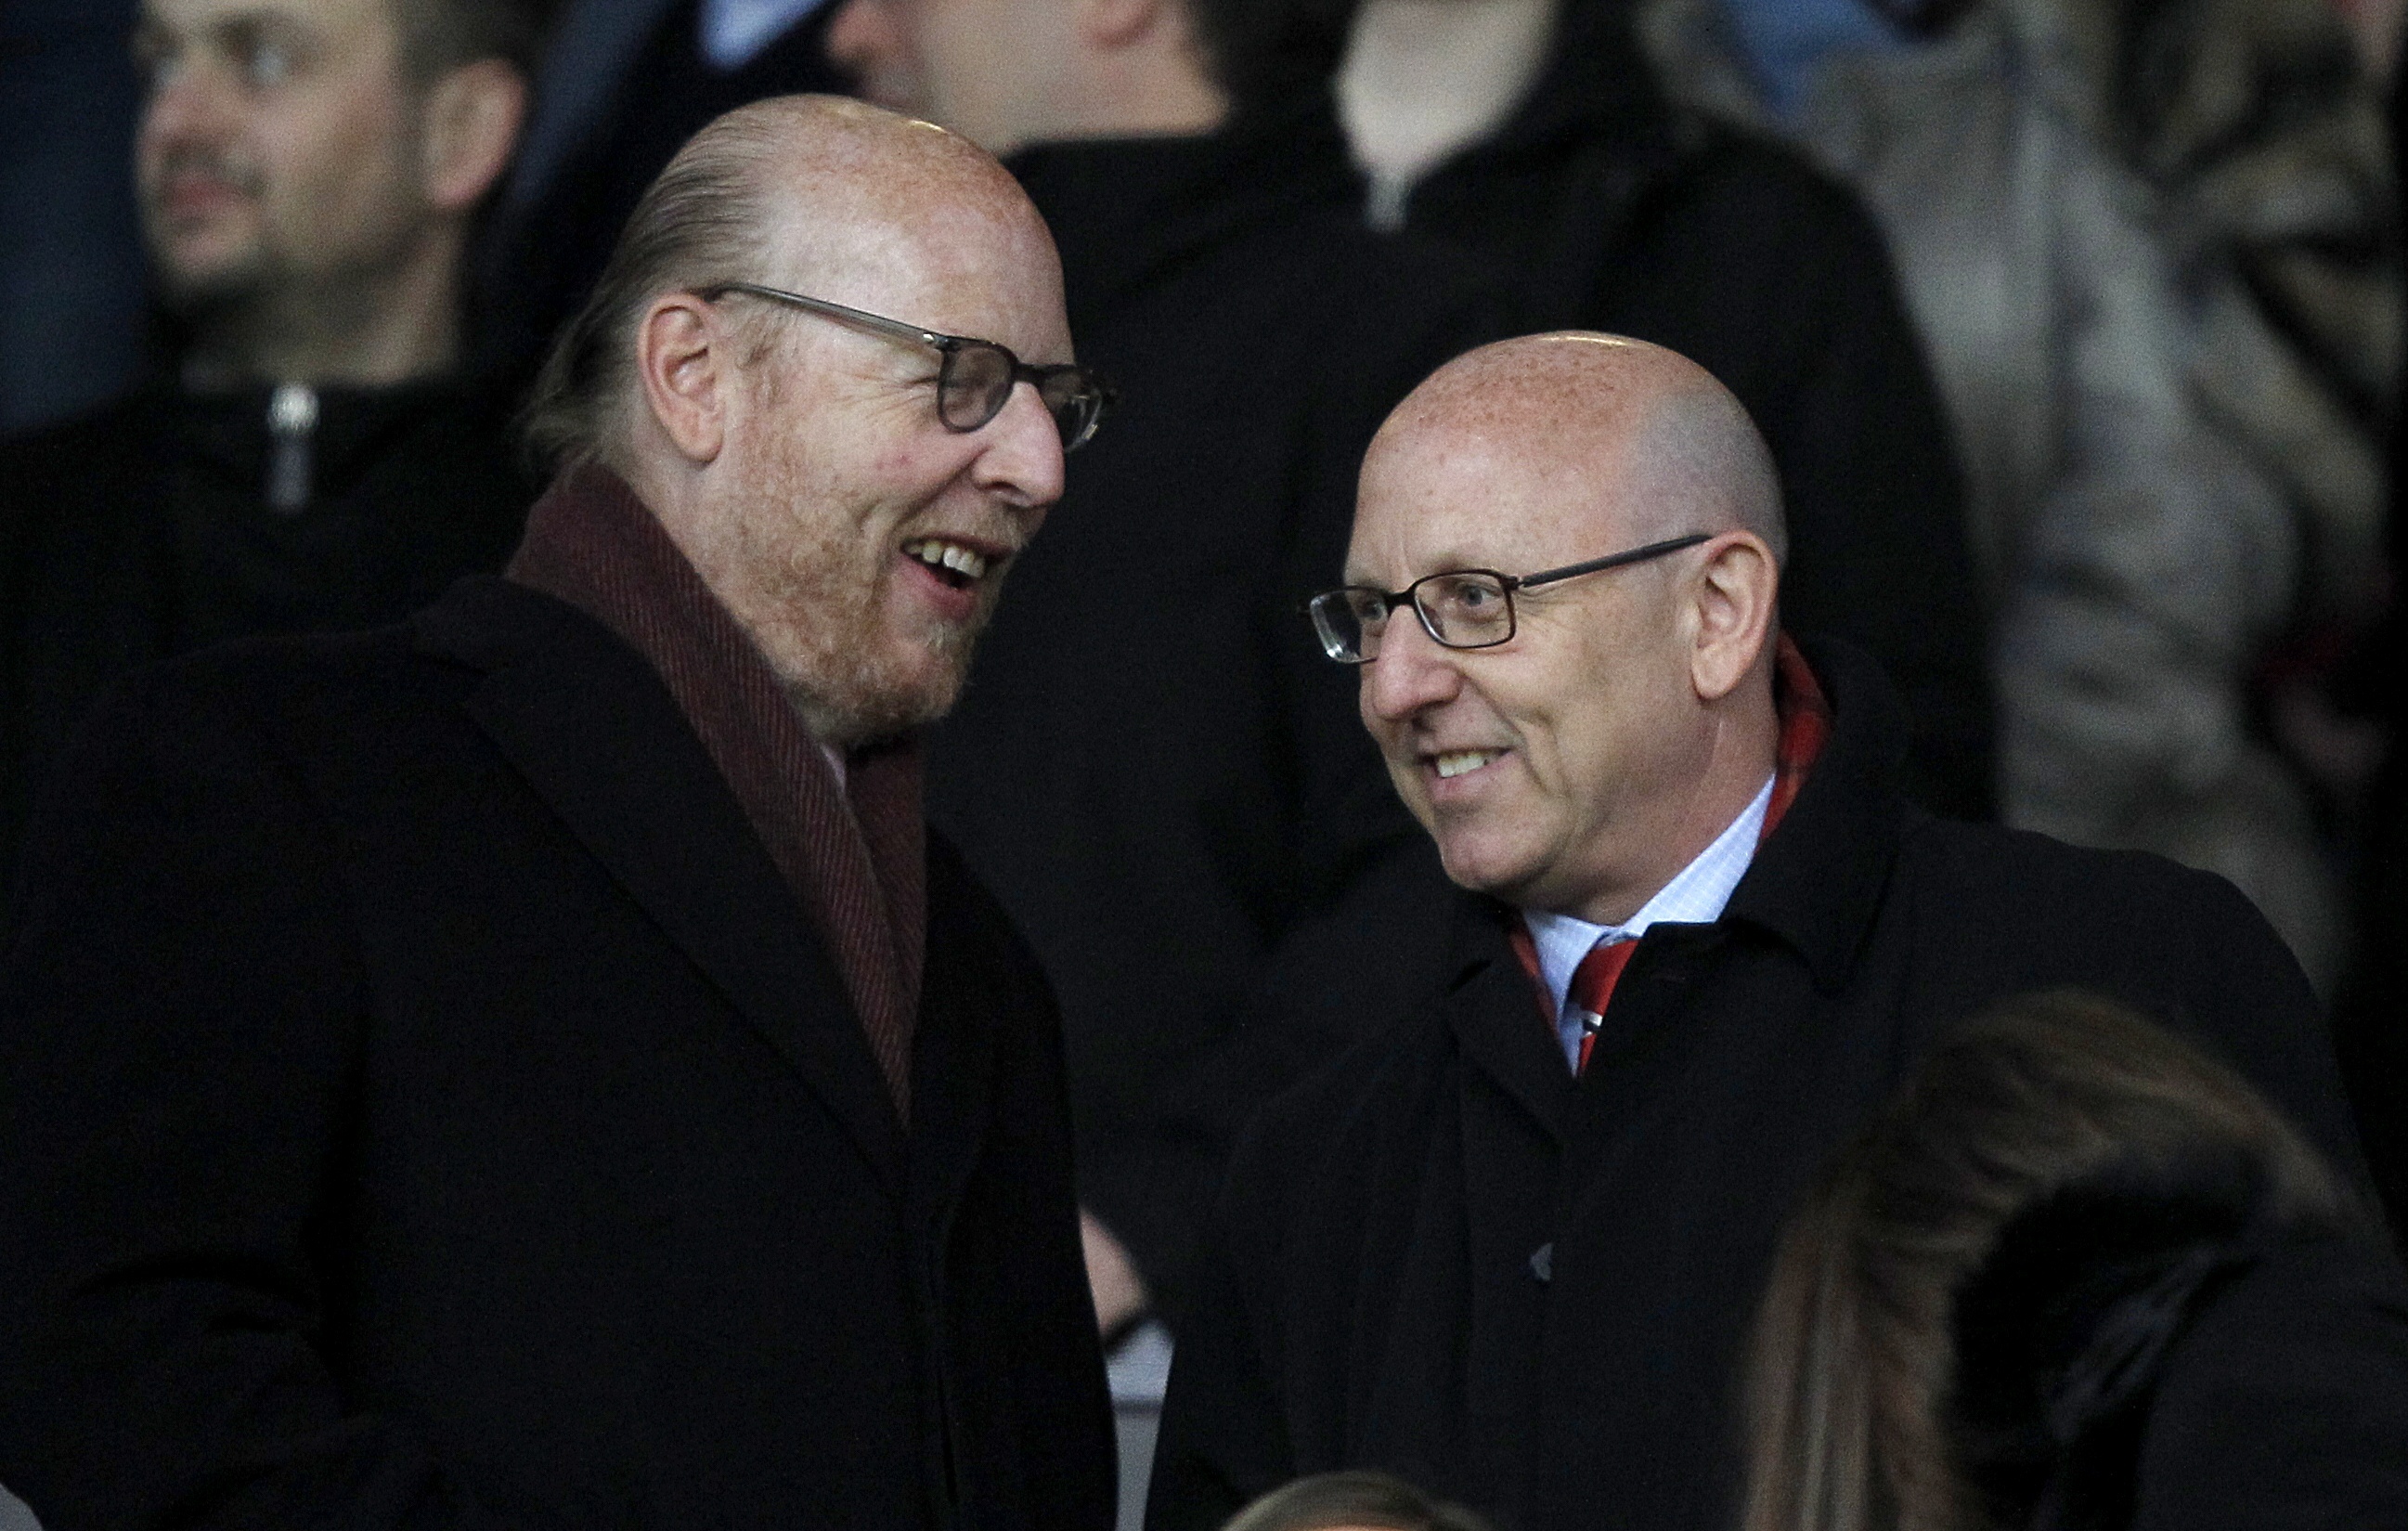 Manchester United joint chairmen Joel Glazer, right, and Avram Glazer, left